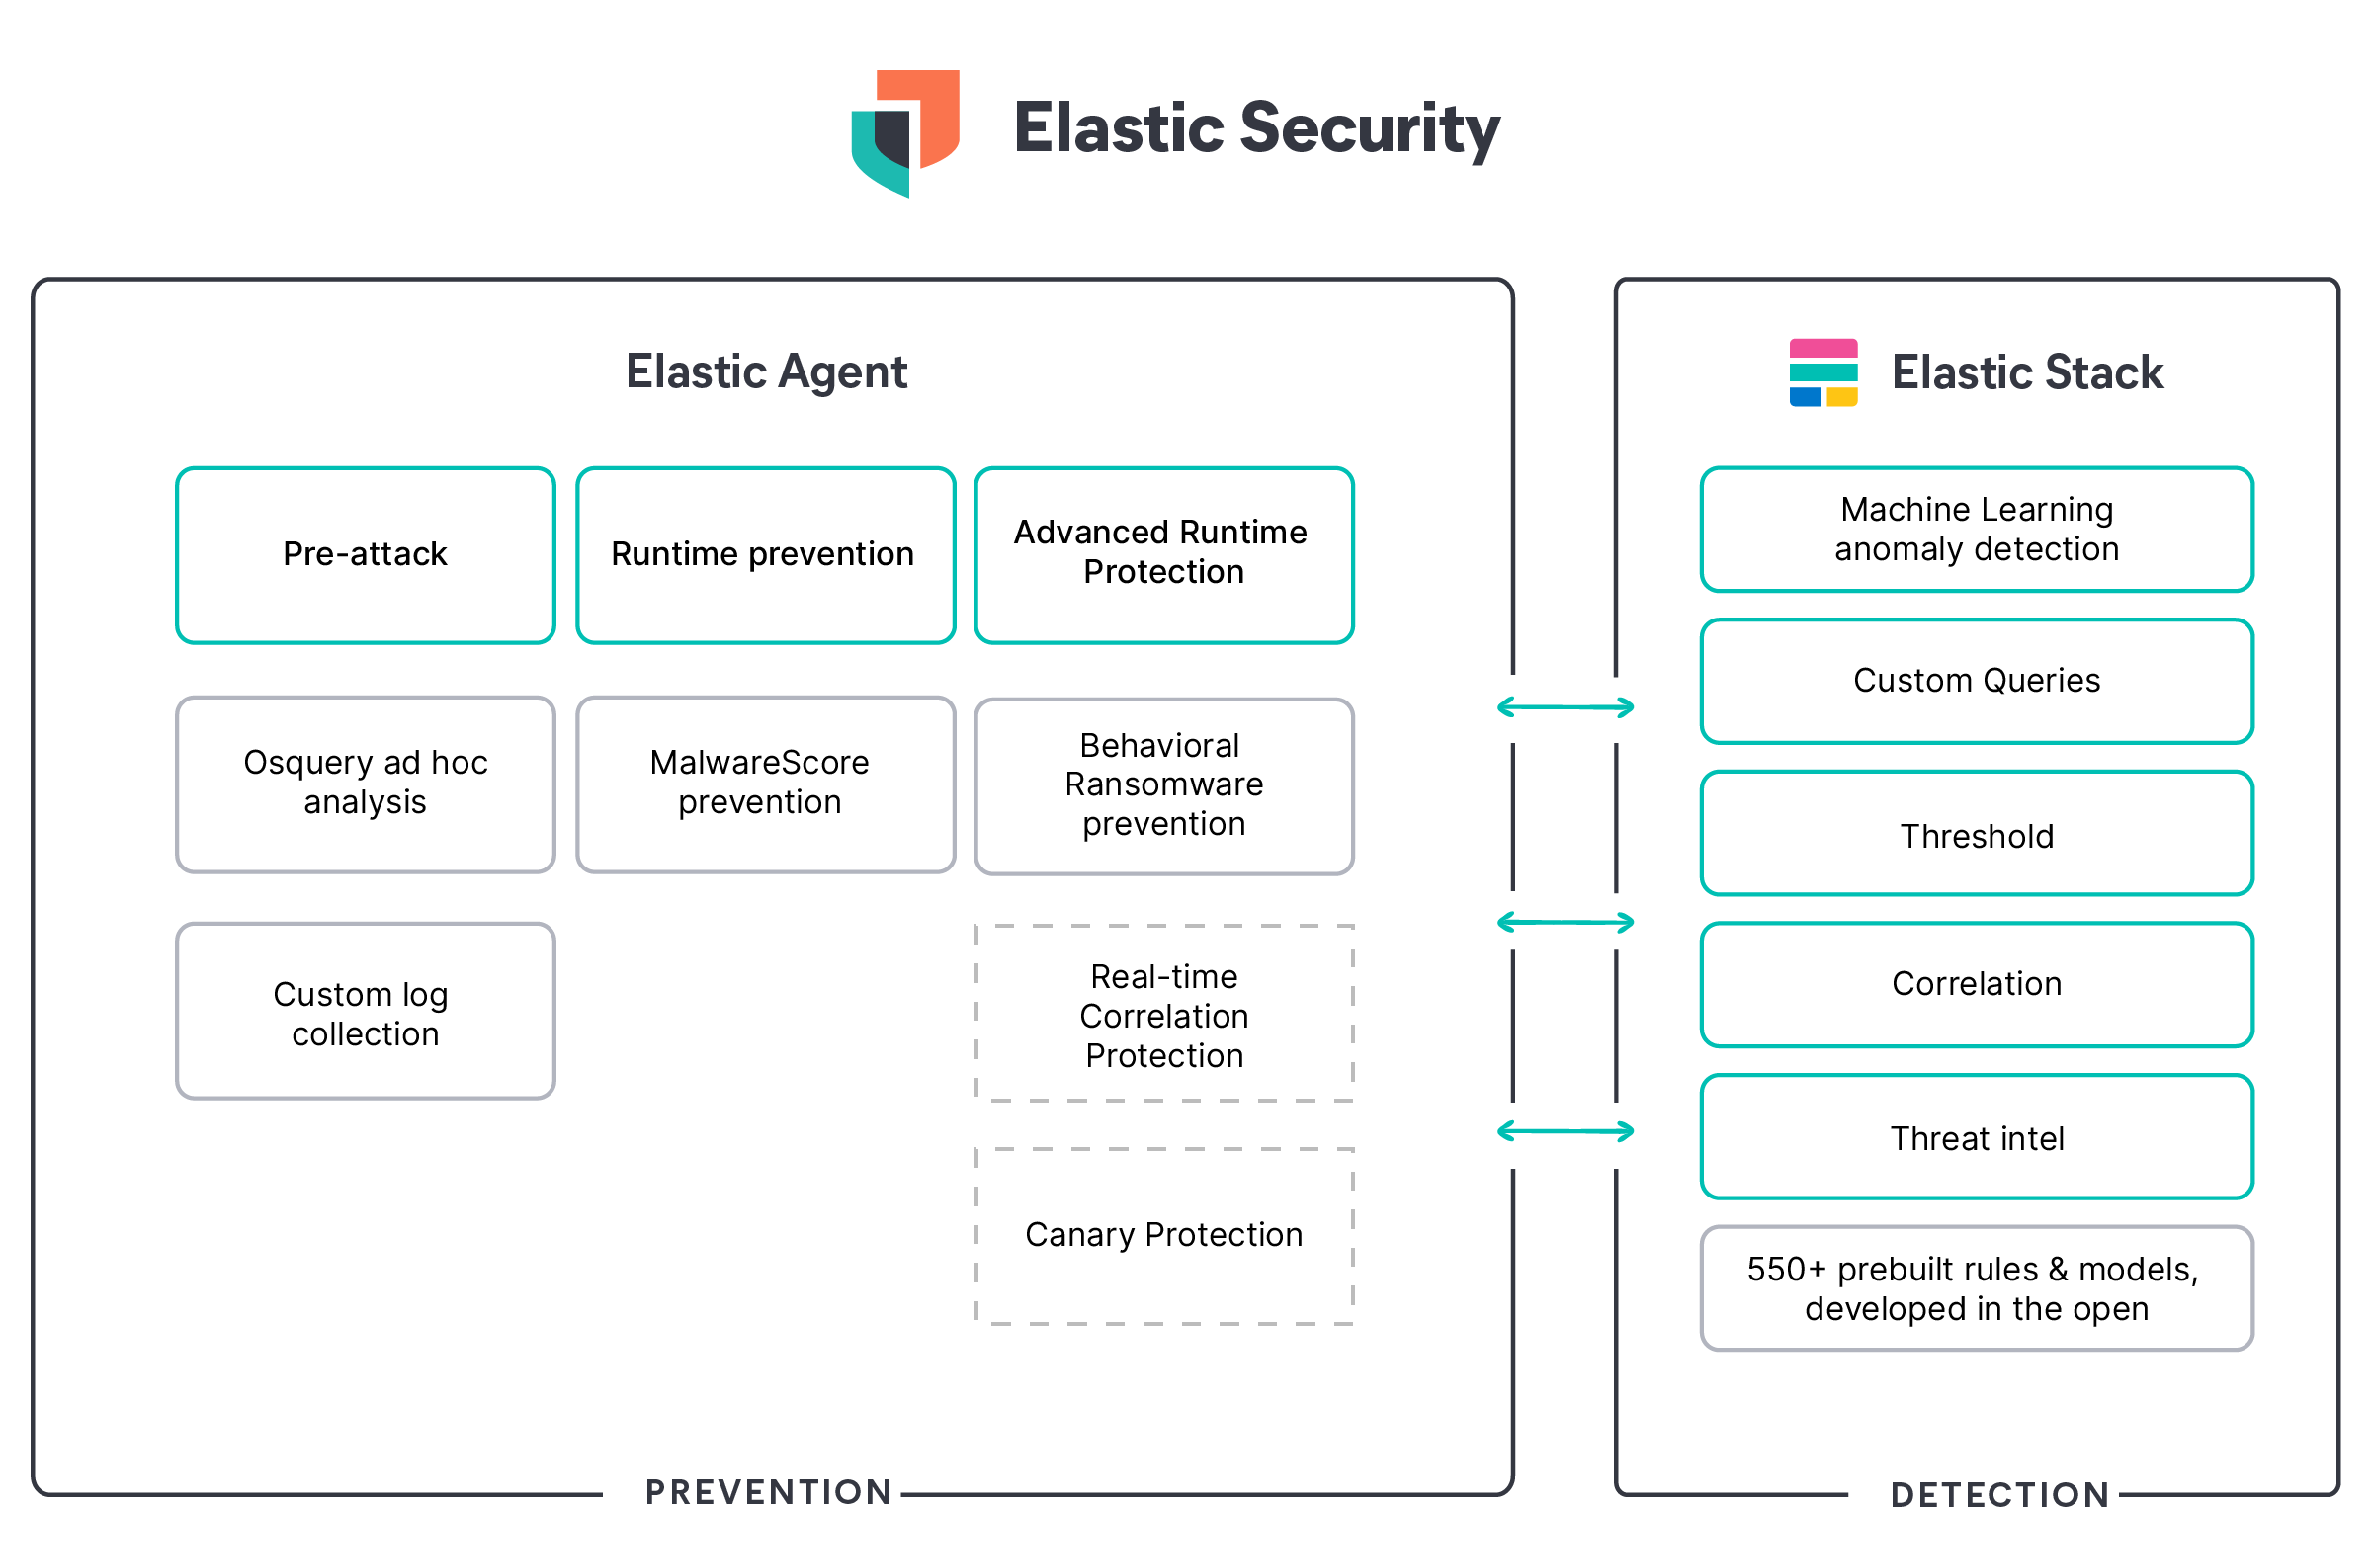 kaseya-elastic-security-protections.png